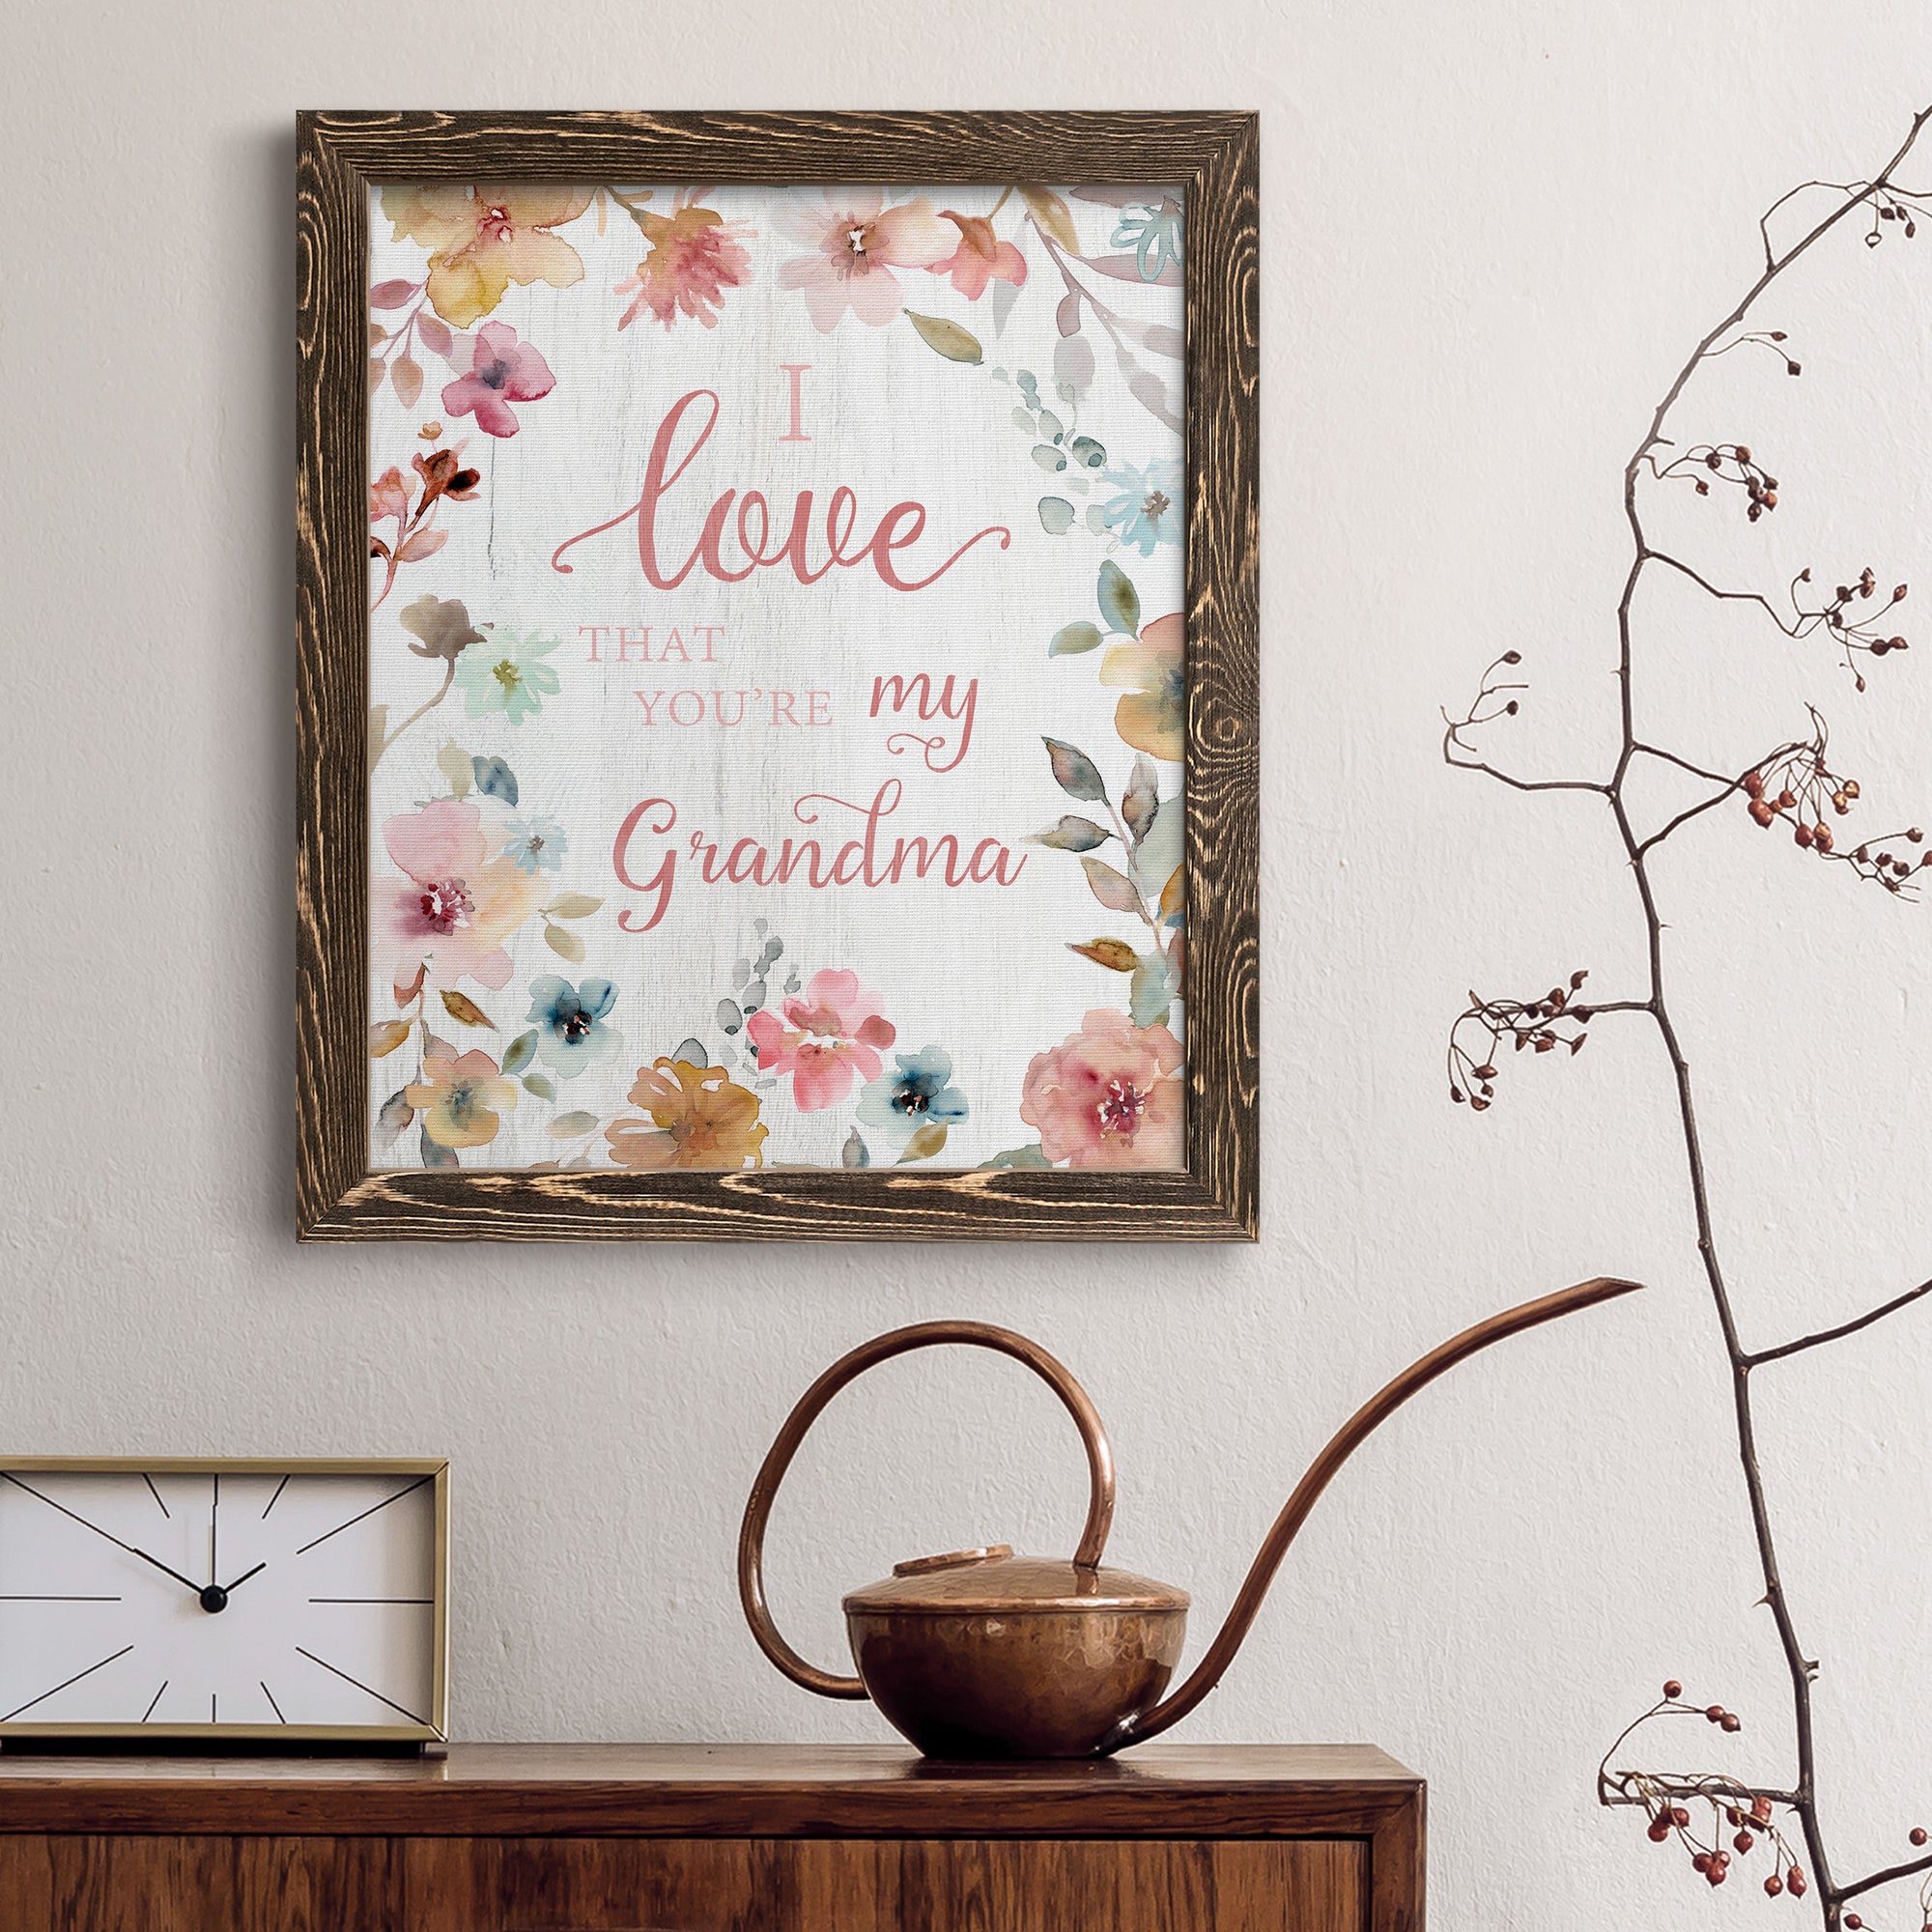 Love Grandma - Premium Canvas Framed in Barnwood - Ready to Hang